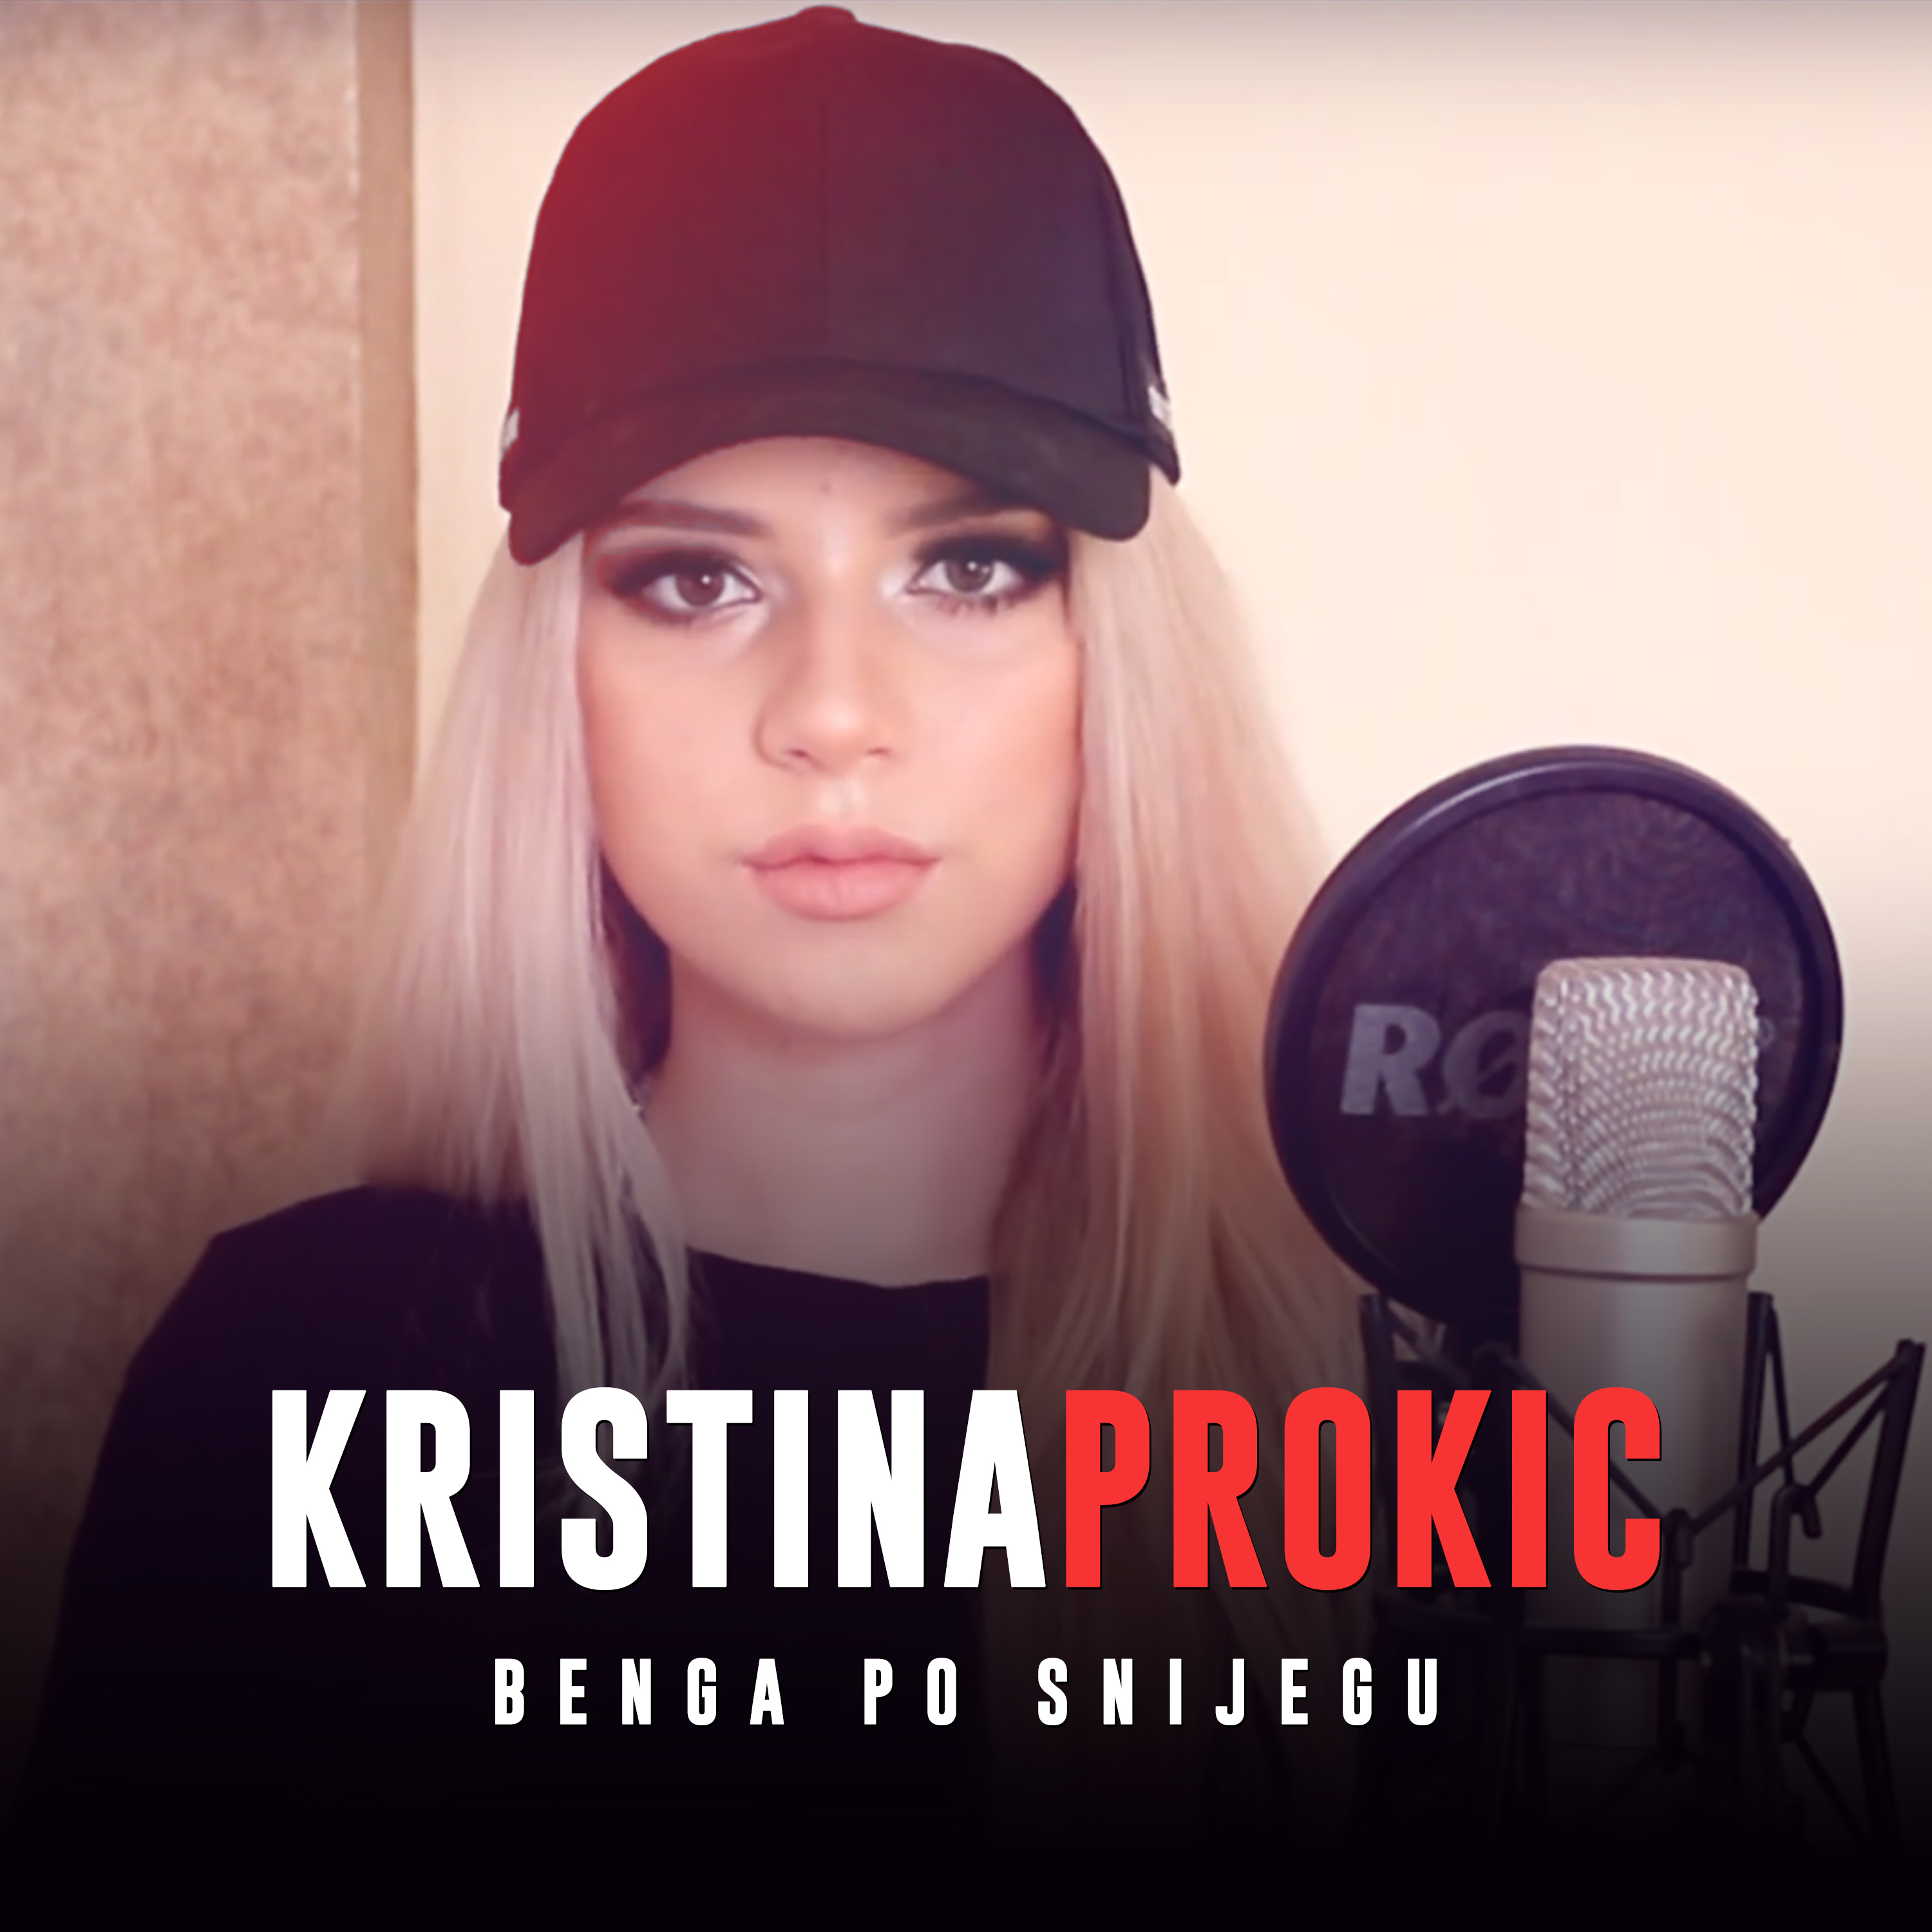 Kristina Prokic - Benga po snijegu (Cover) - Listen on Spotify, Deezer, YouTube, Google Play Music and Buy on Amazon, iTunes Google Play | EMDC Network